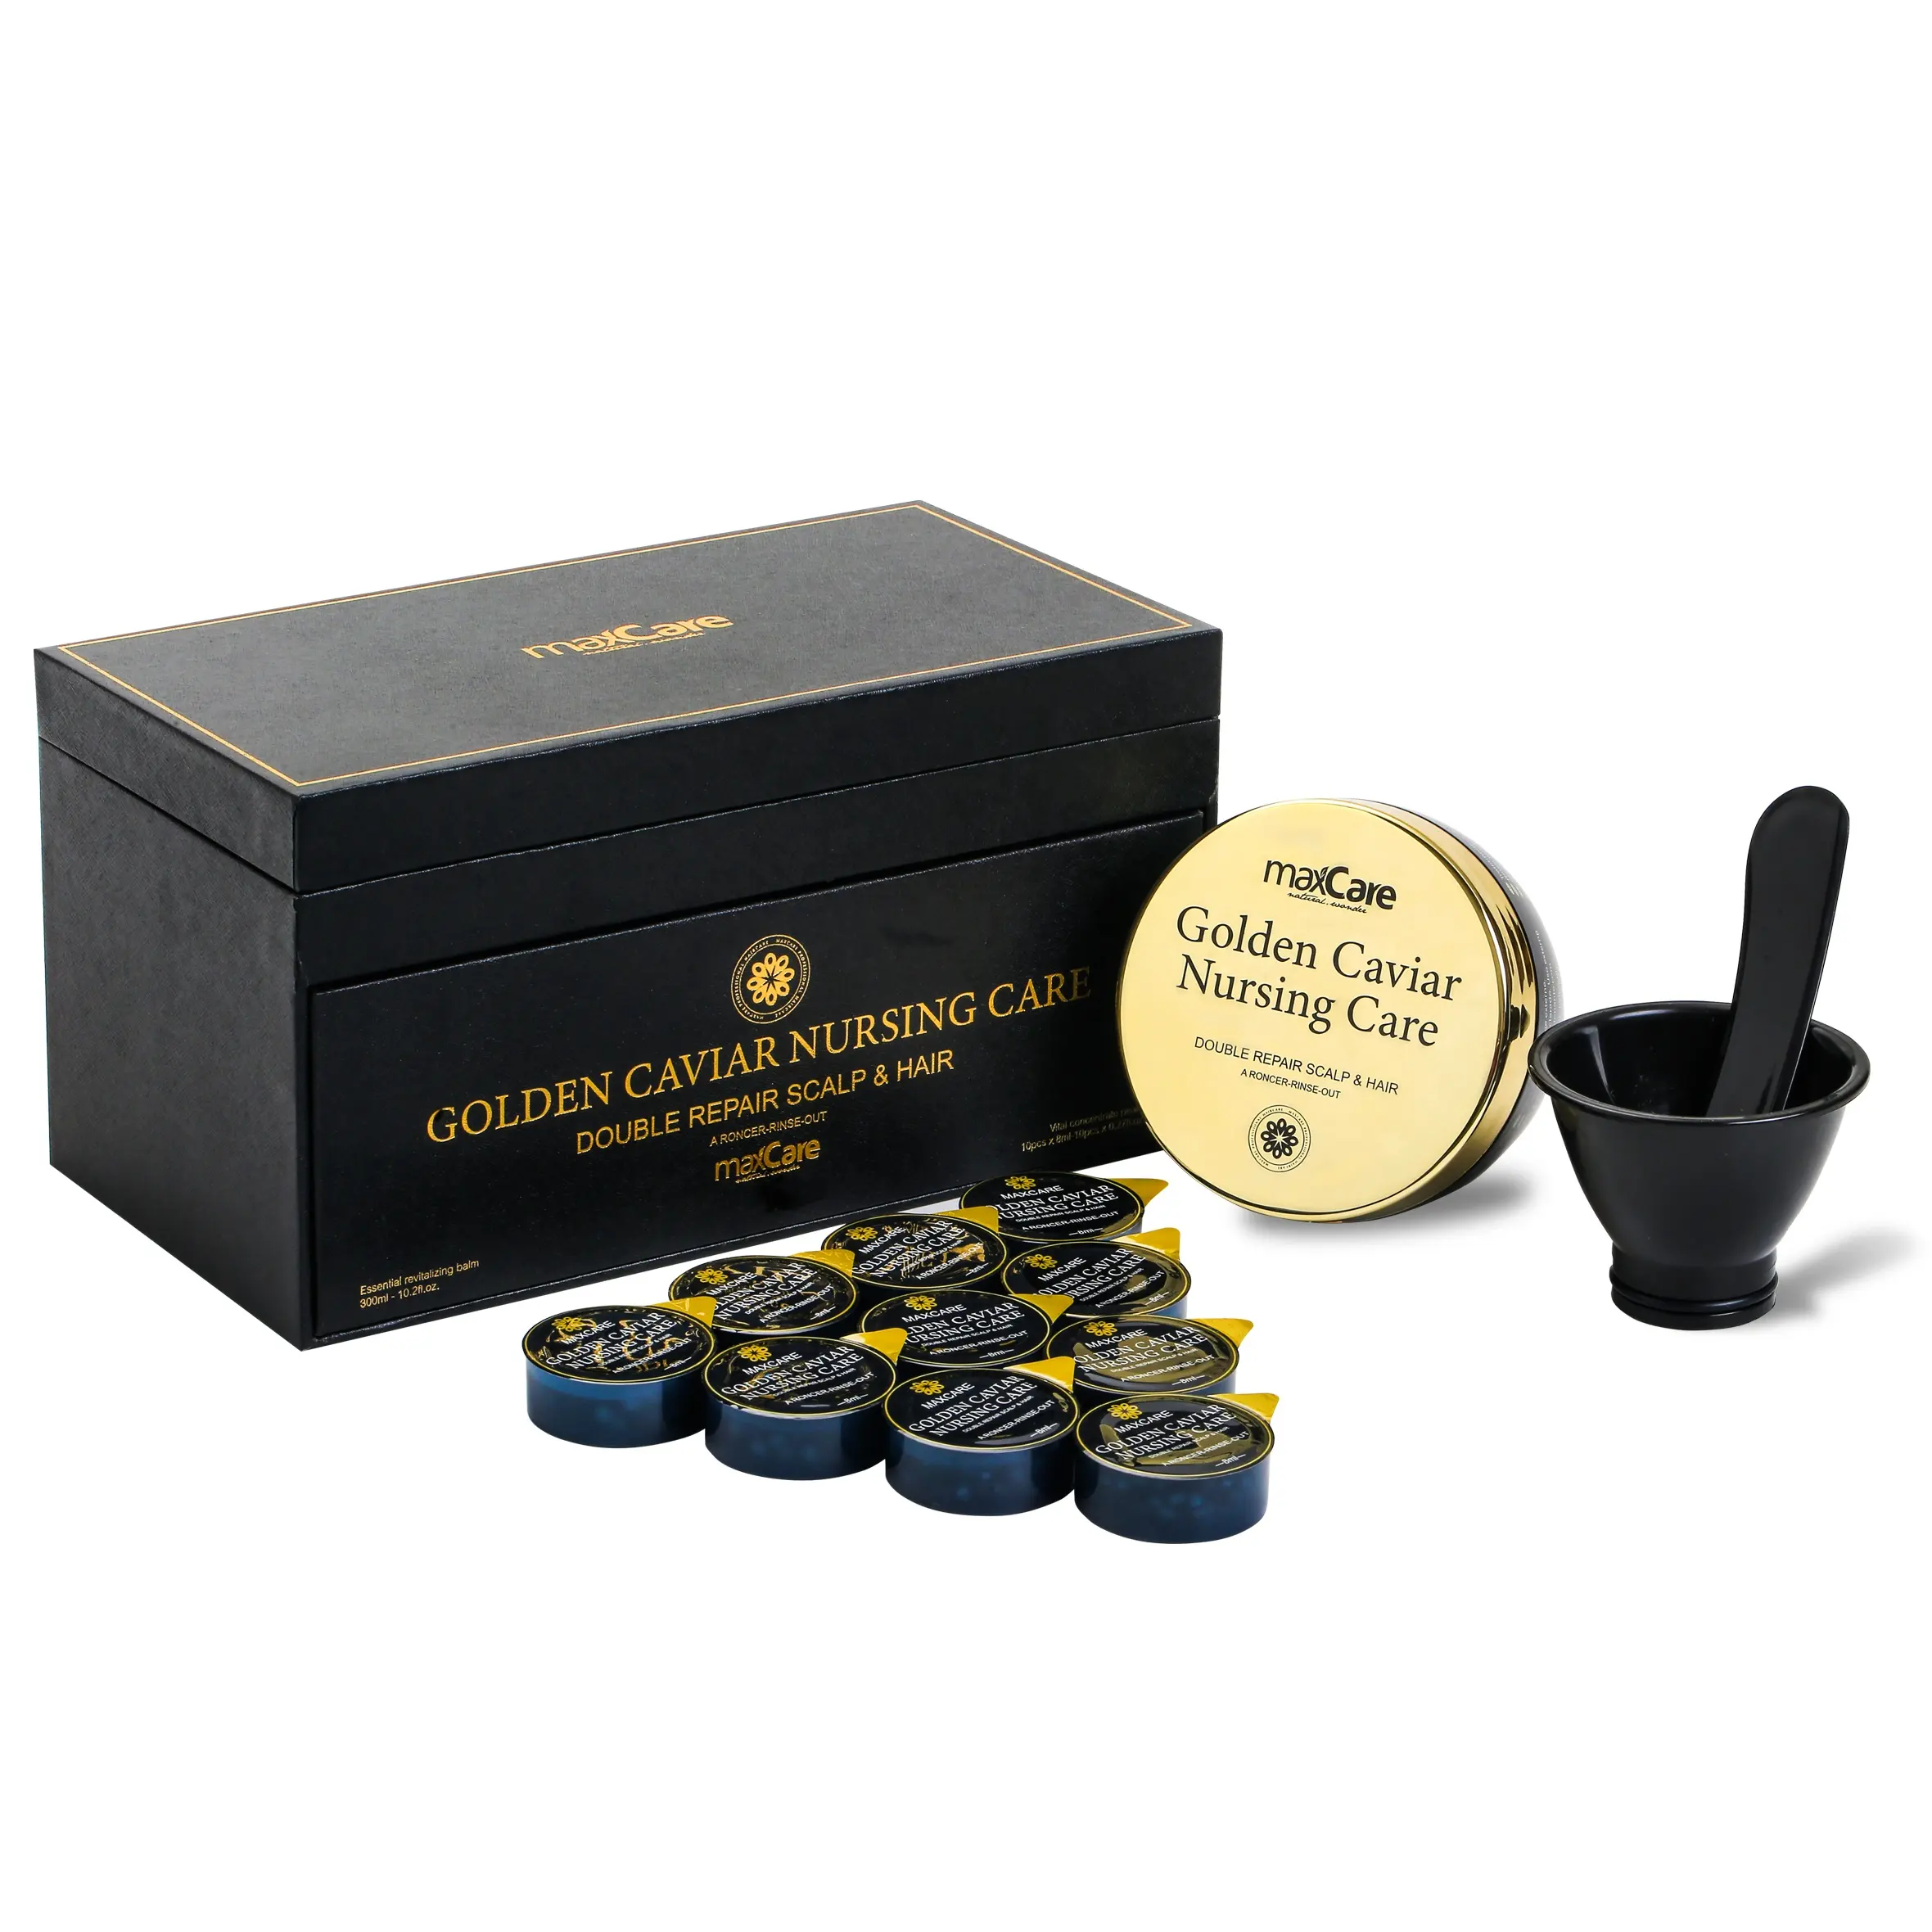 Produtos dos cuidados profissionais Golden Caviar Nursing Care tratamento capilar máscara